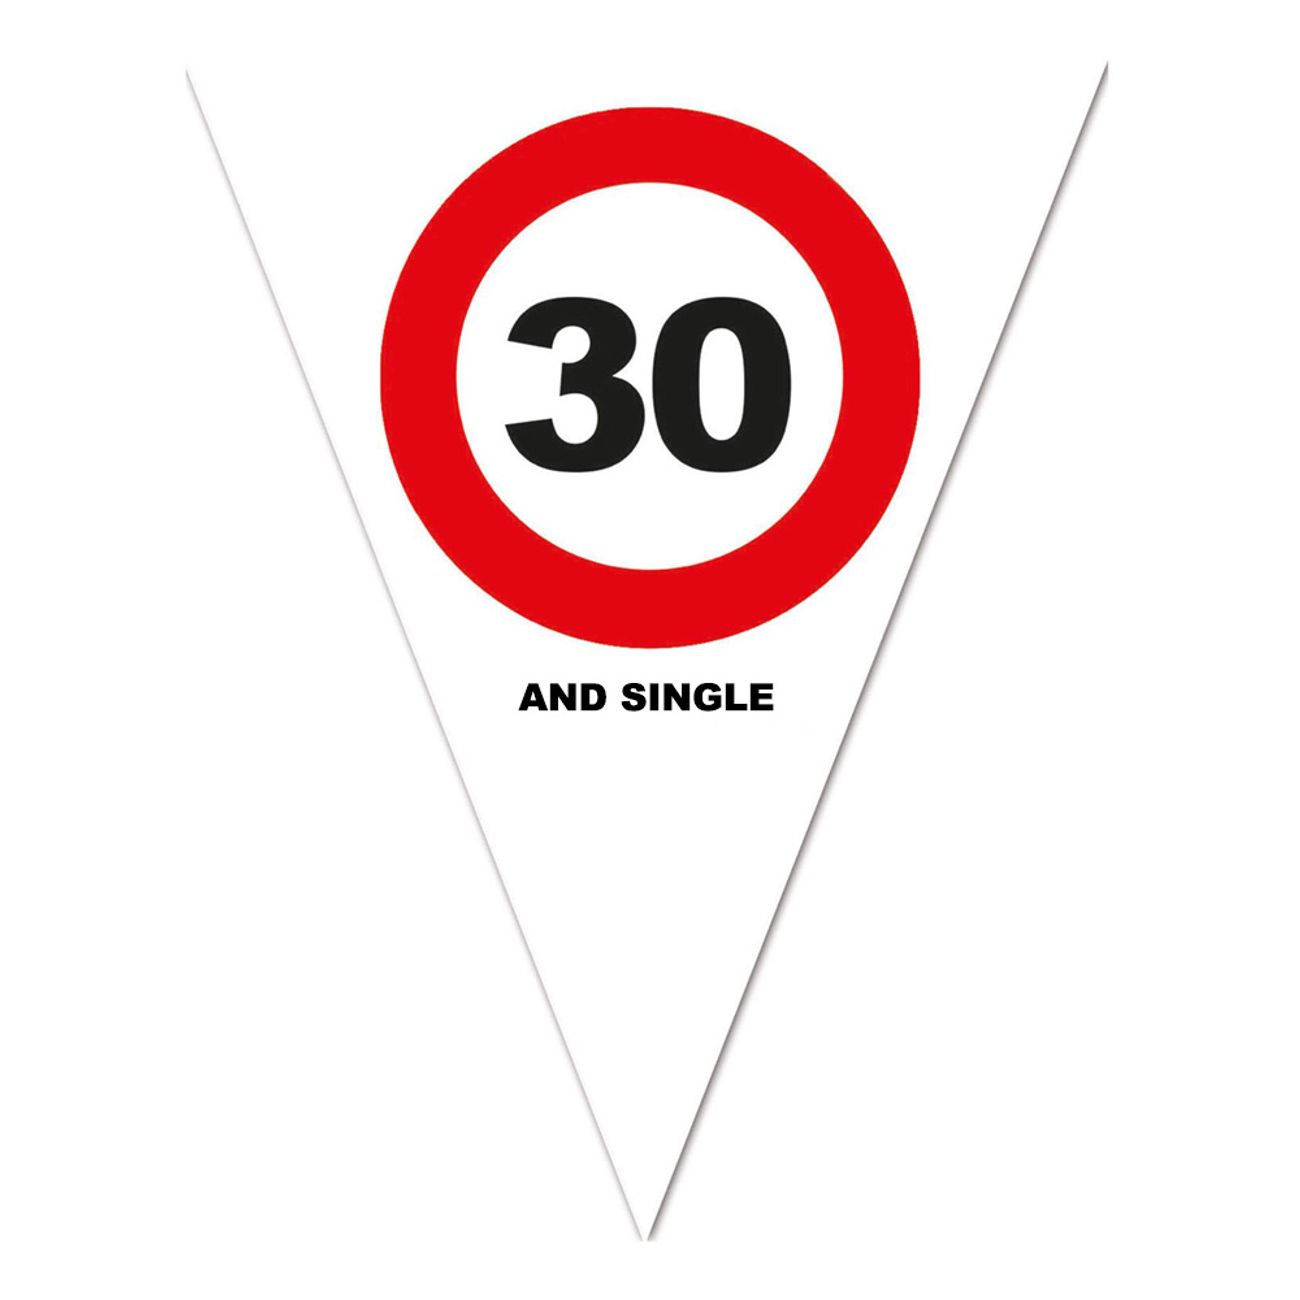 flaggirlang-trafikskylt-30-and-single-4